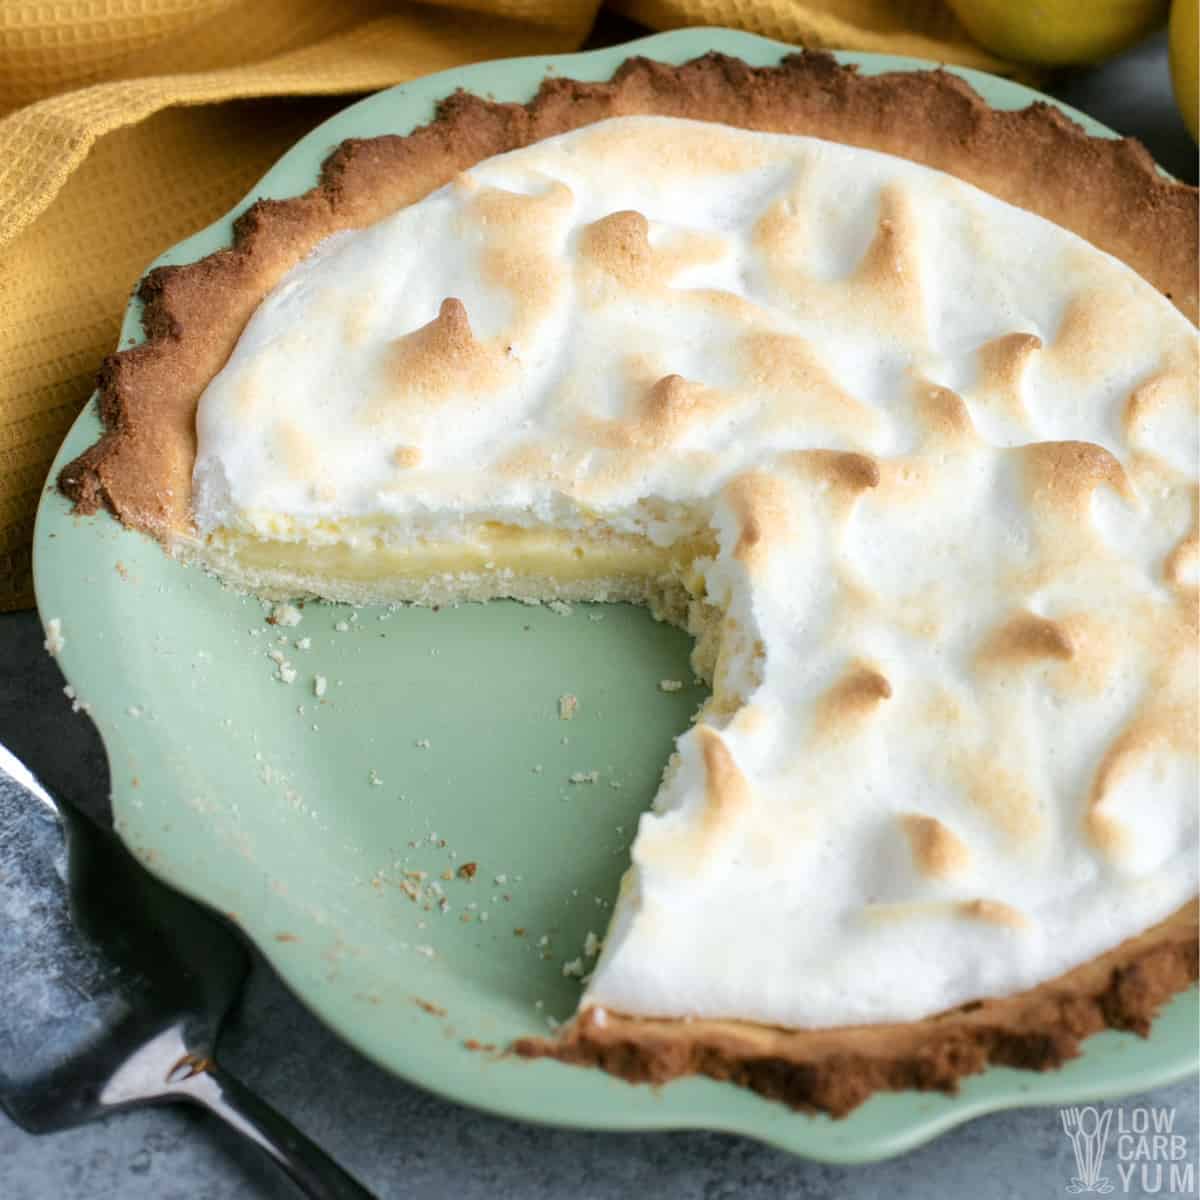 keto lemon meringue pie with slices missing.